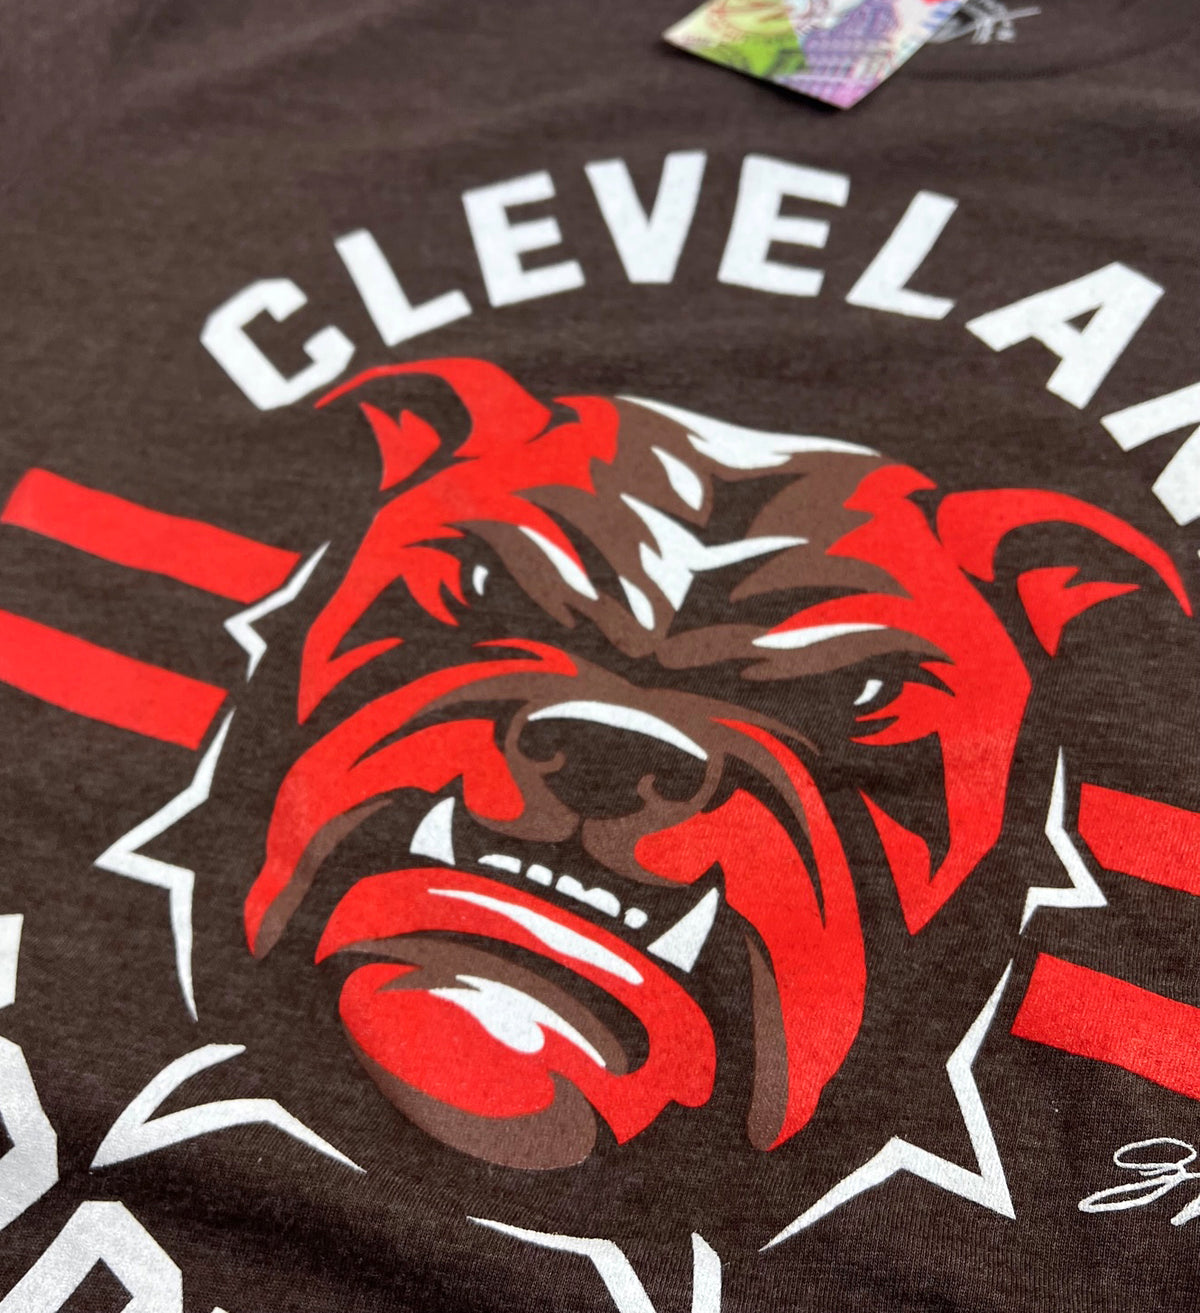 Cleveland Football Circle DAWG T shirt